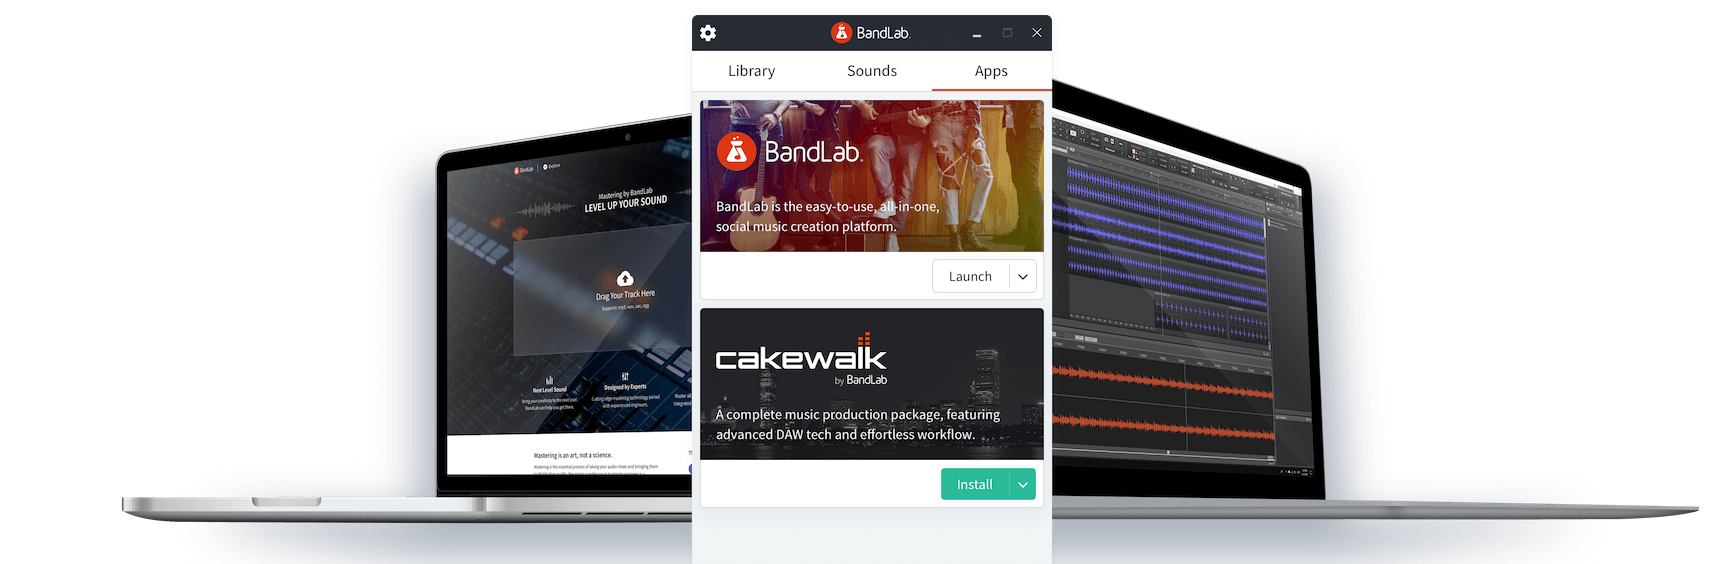 bandlab desktop app